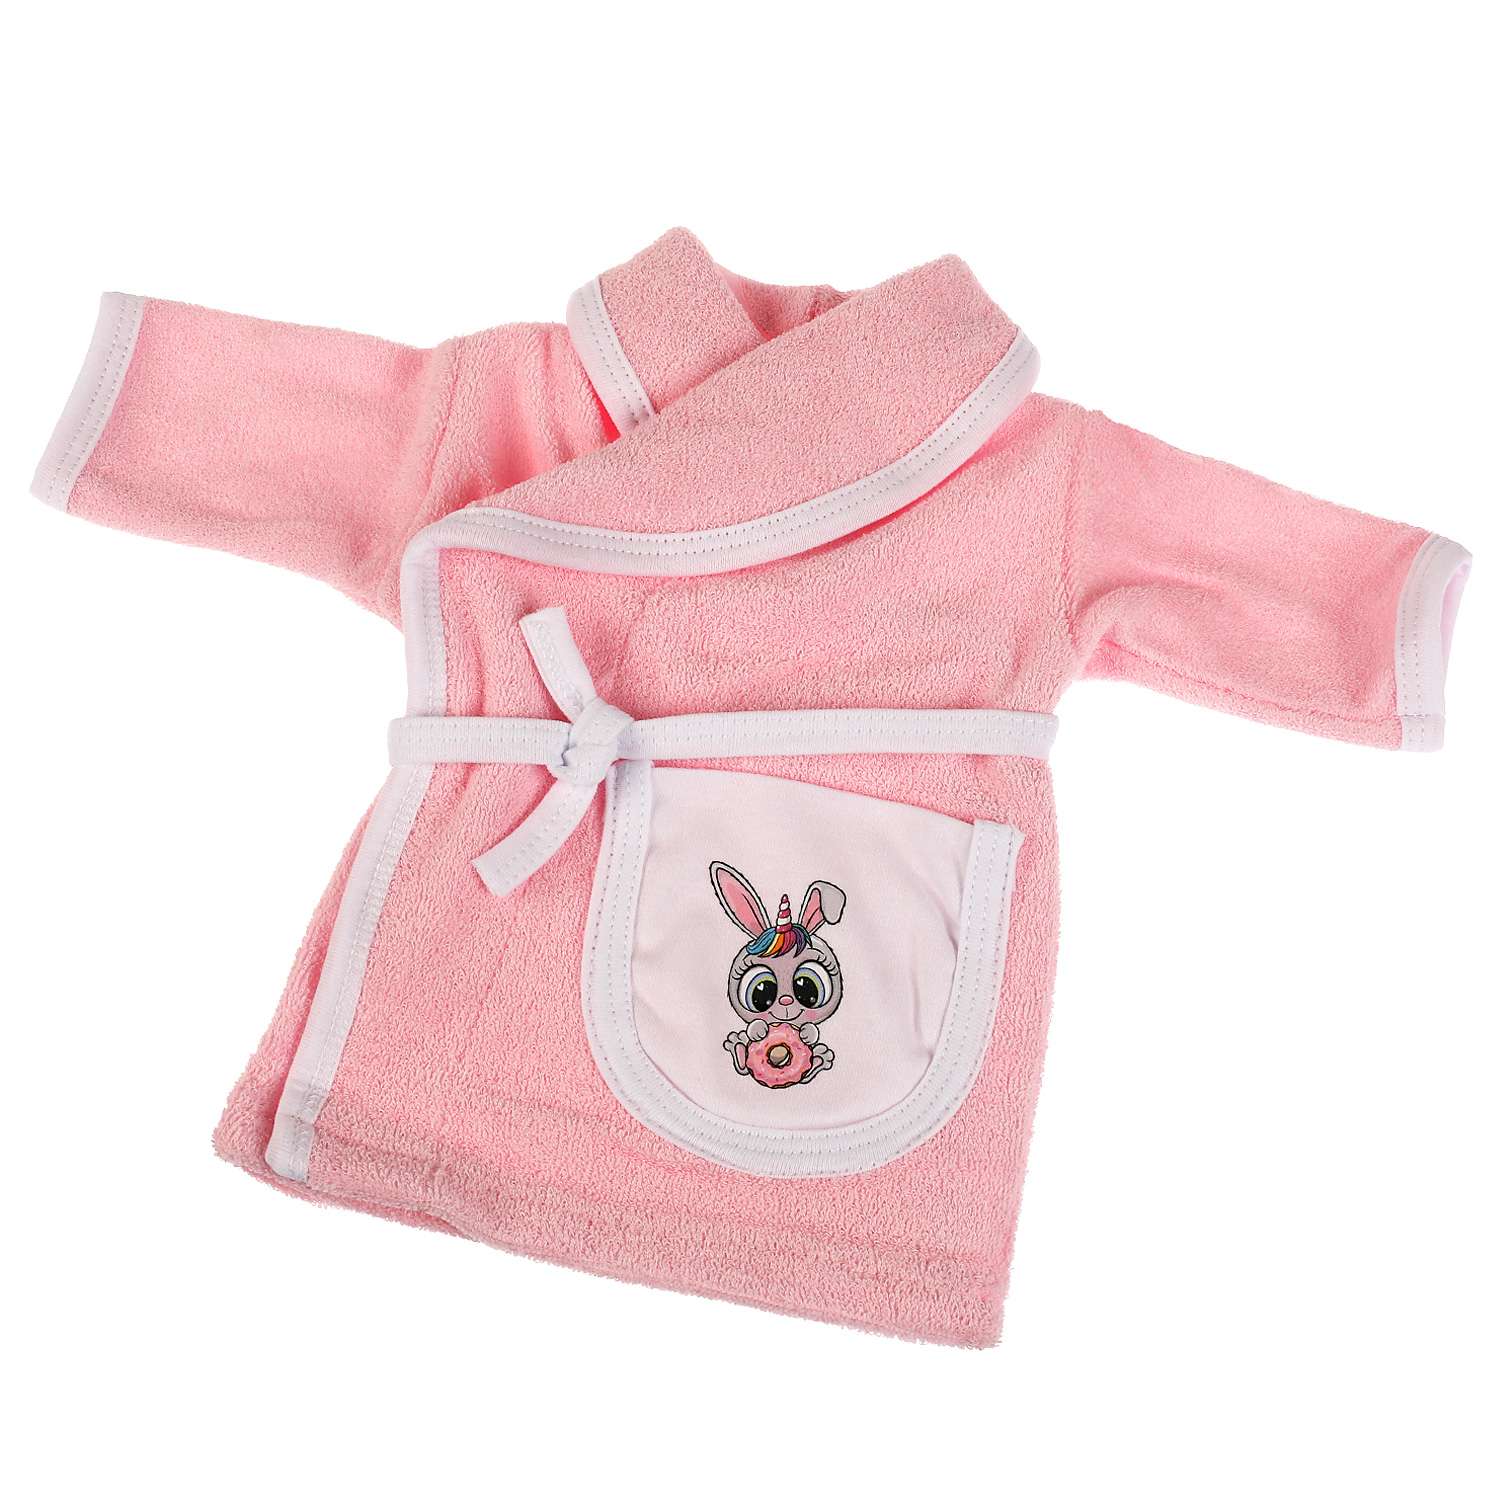 Одежда для кукол Карапуз 40-42 см розовый халат зайка 334998 - фото 1